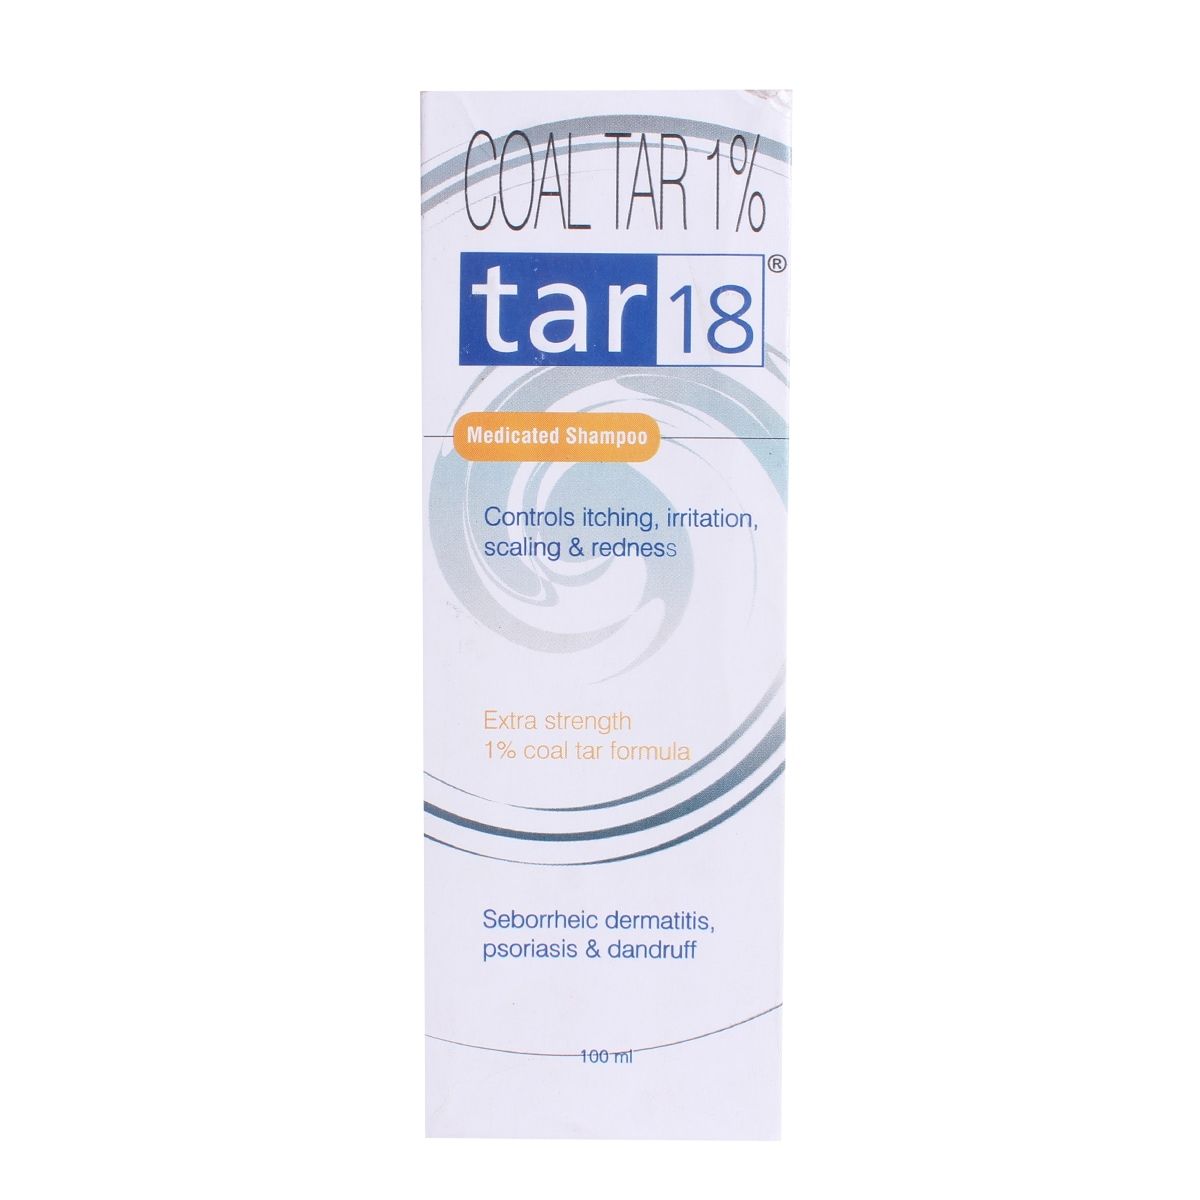 Buy Tar 18 Medicated Shampoo 100 ml Online